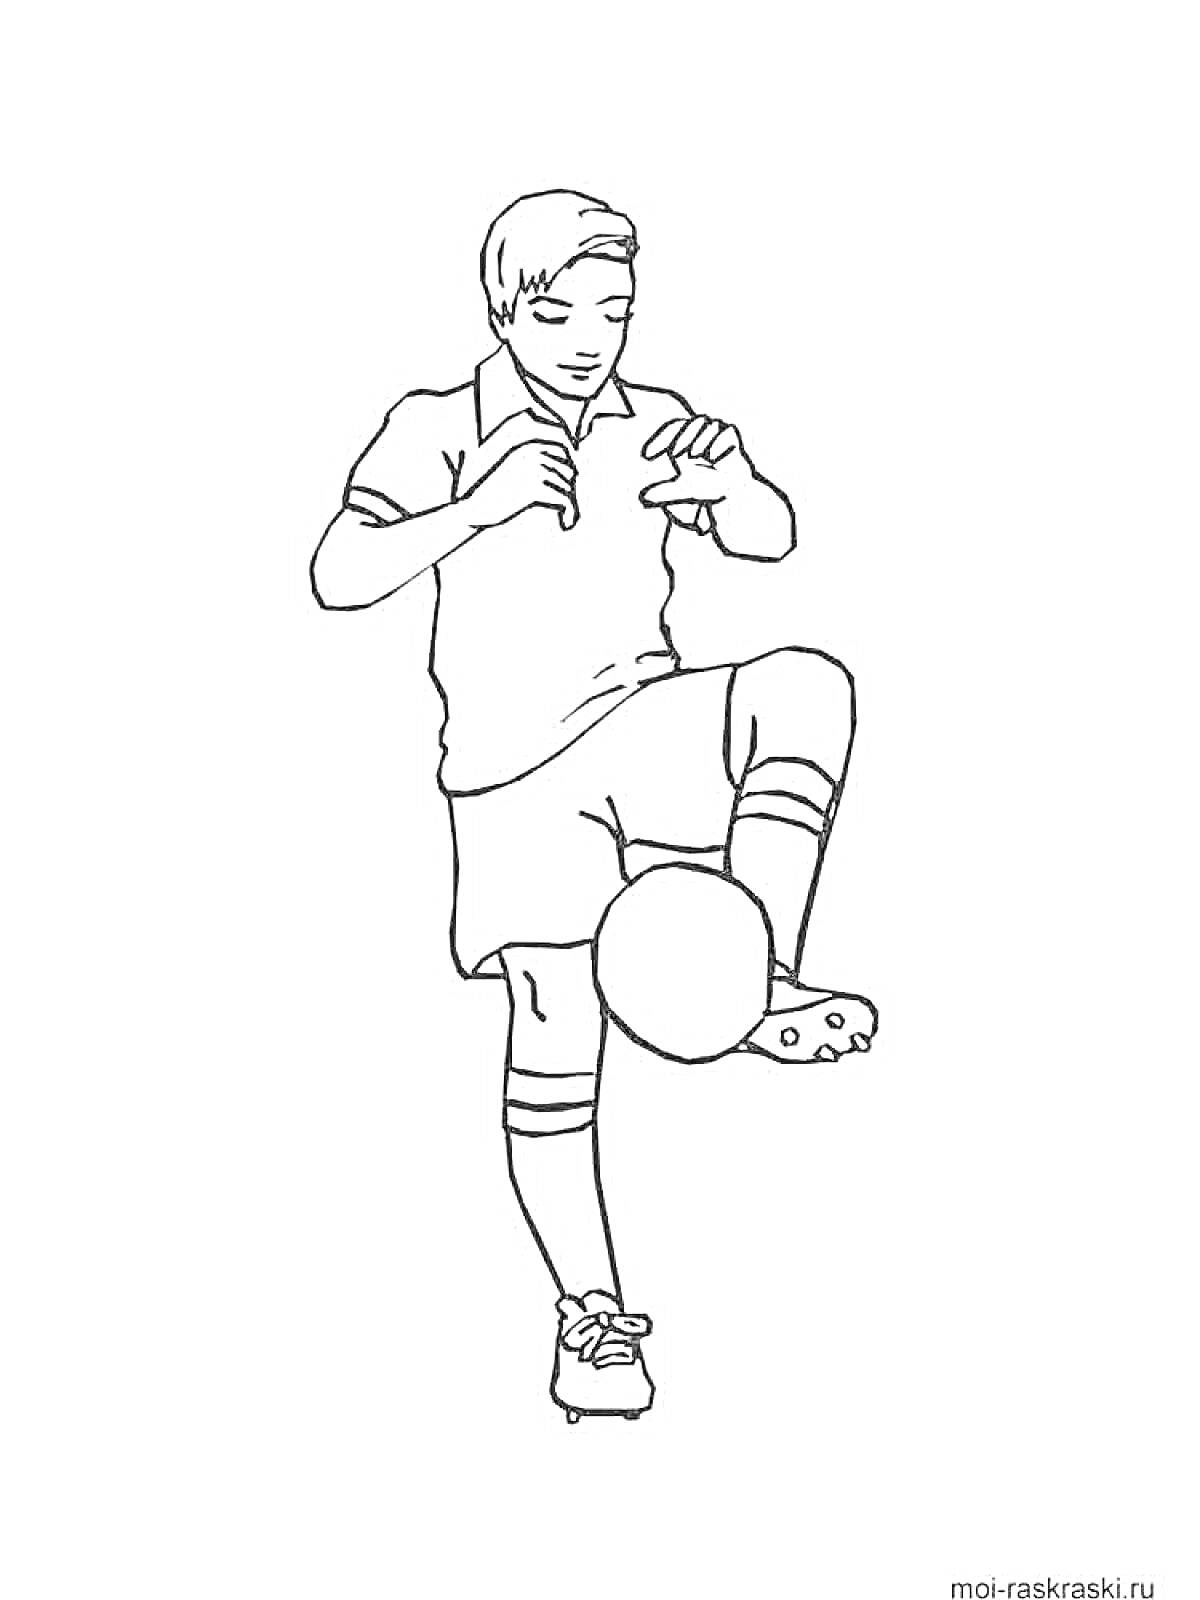 Раскраска Футболист, жонглирующий мячом